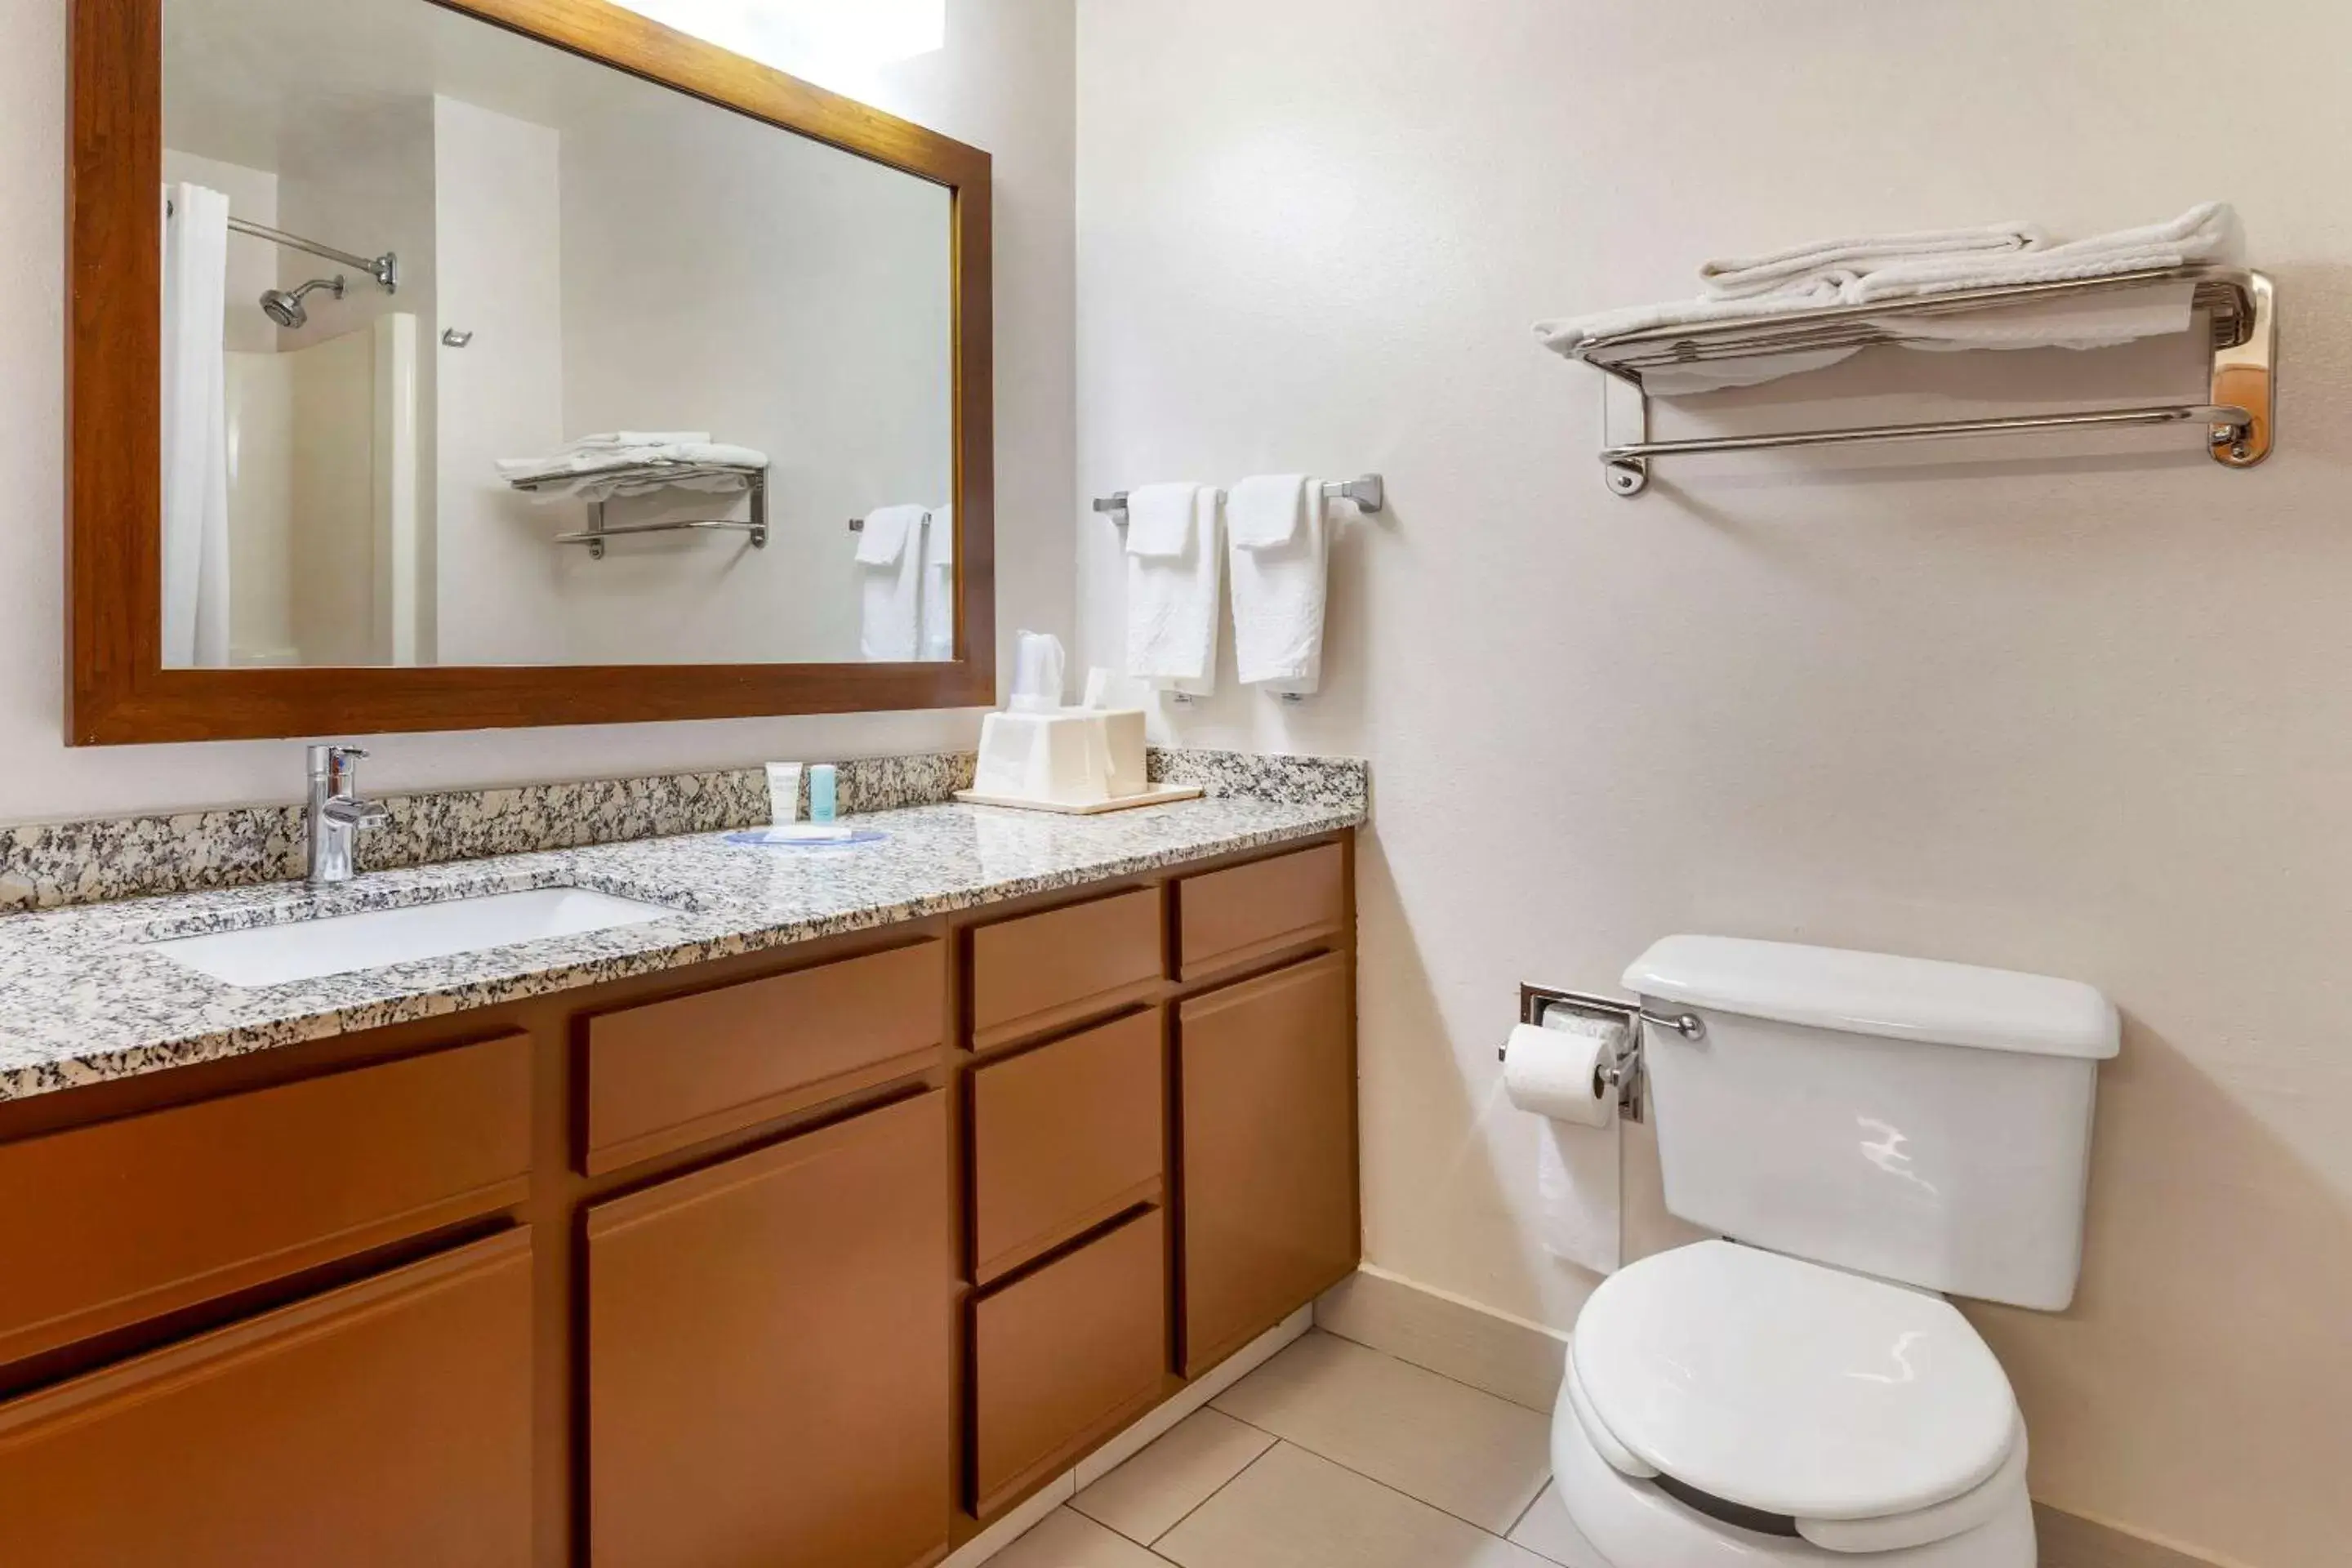 Bedroom, Bathroom in MainStay Suites Dubuque at Hwy 20